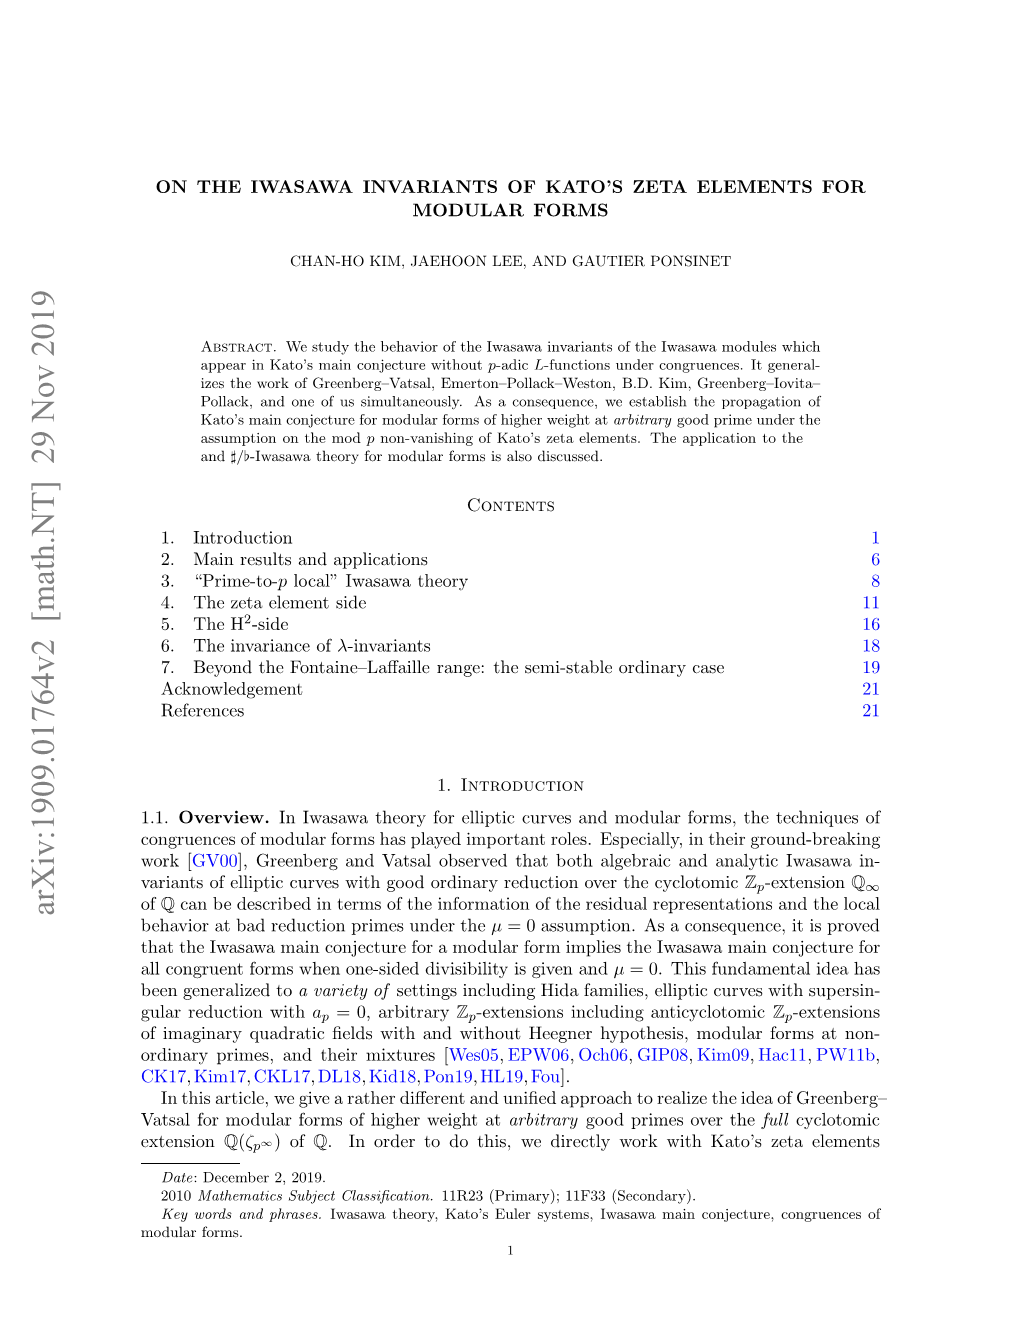 On the Iwasawa Invariants of Kato's Zeta Elements for Modular Forms